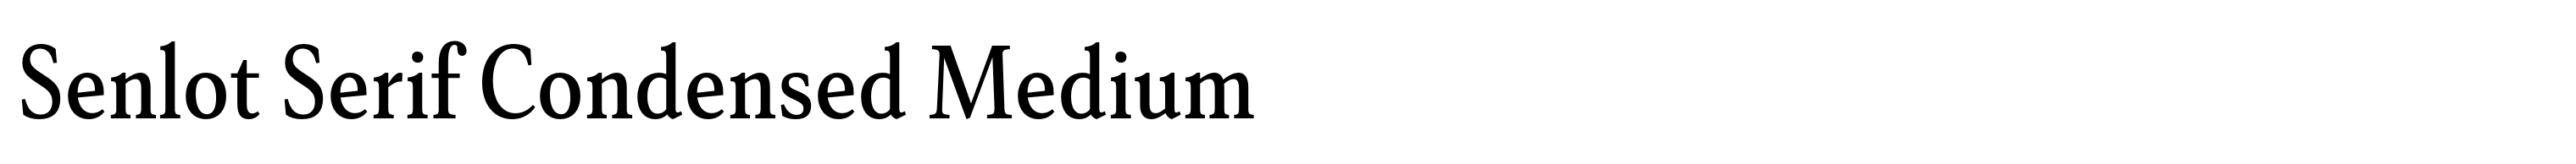 Senlot Serif Condensed Medium